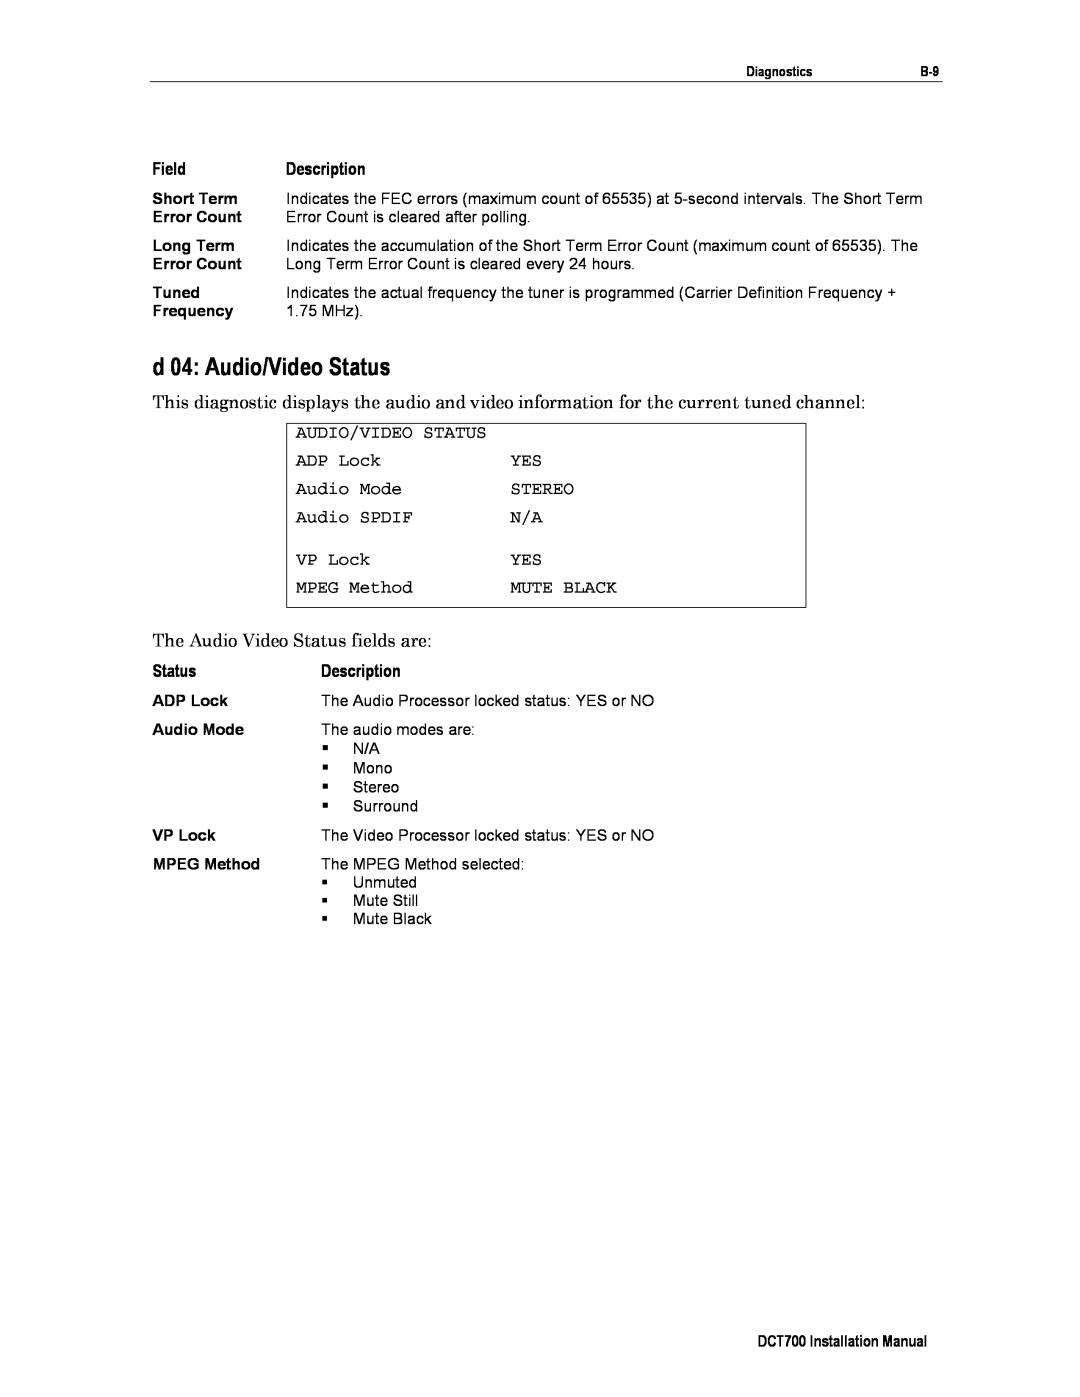 Motorola DTC700, DCT700 installation manual d 04: Audio/Video Status, Field, Description 